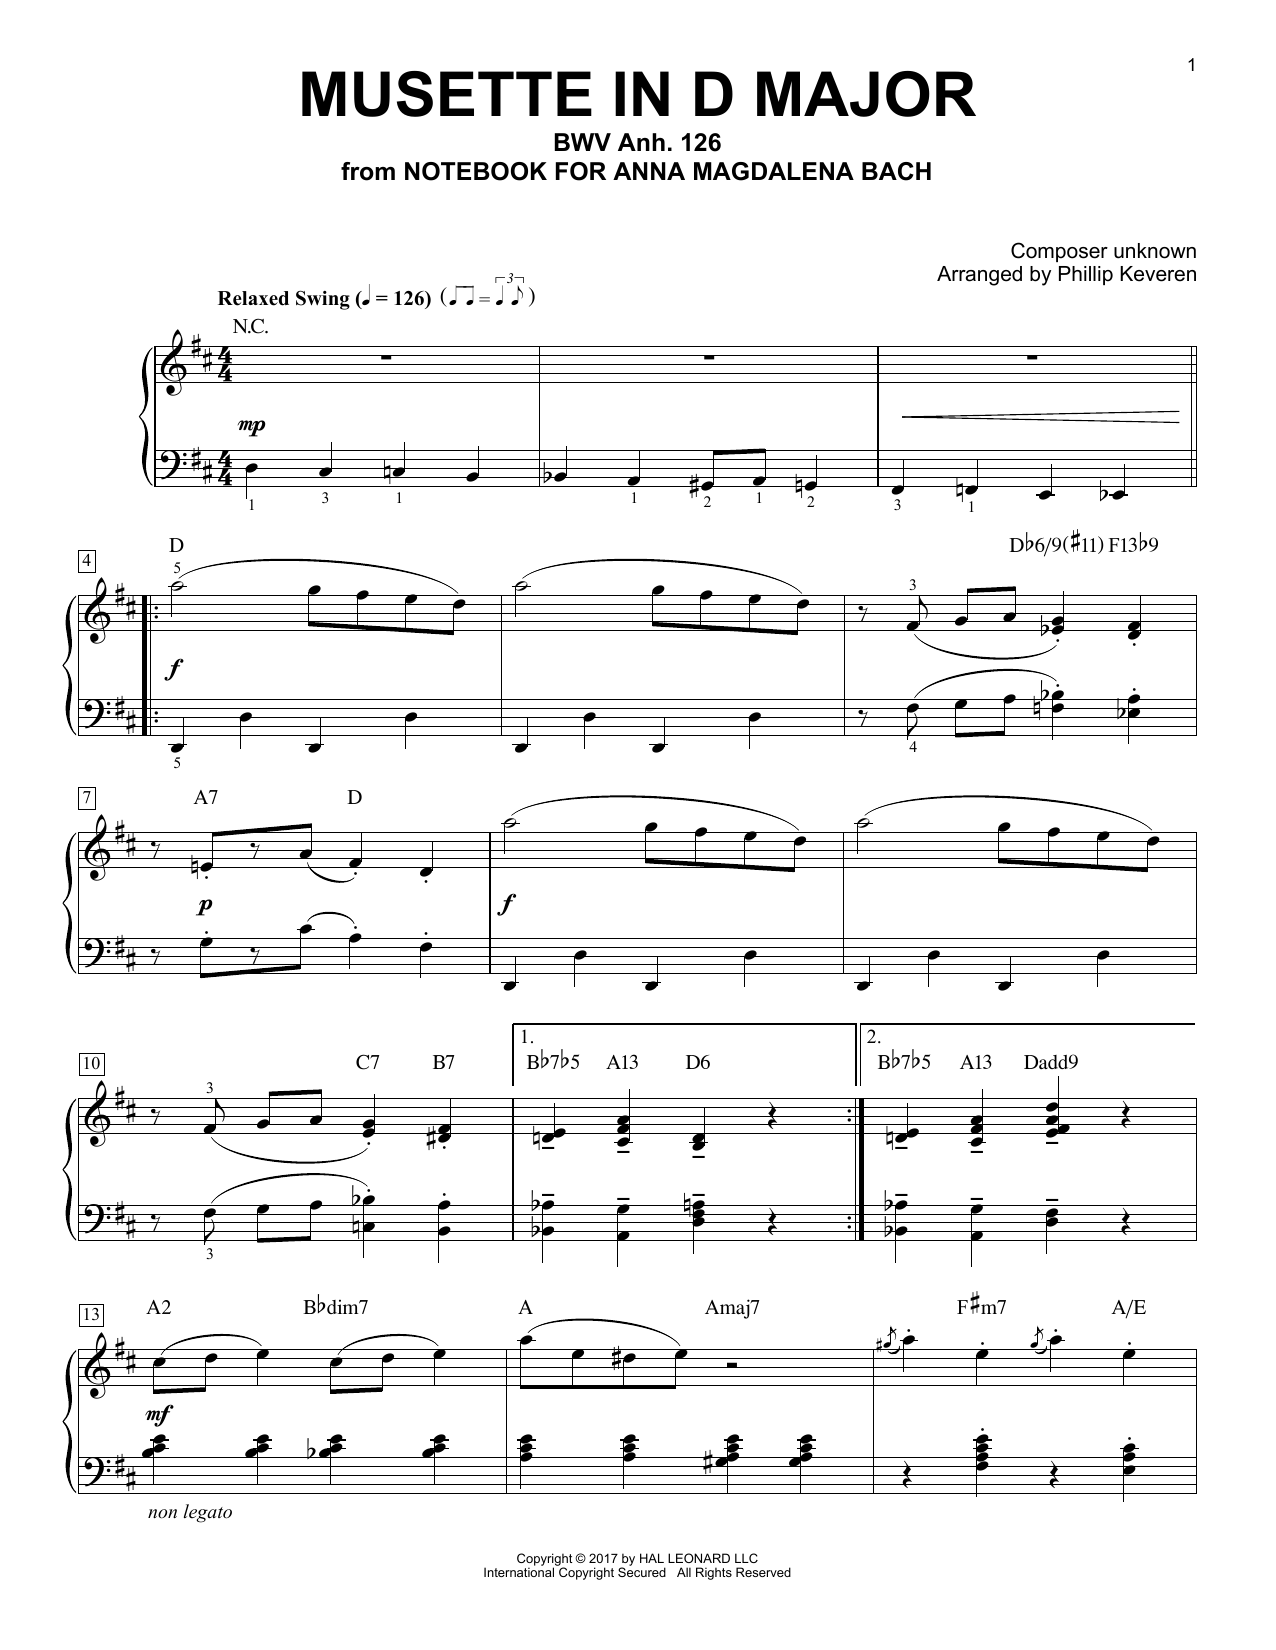 Johann Sebastian Bach Musette In D Major, BWV Anh. 126 [Jazz version] (arr. Phillip Keveren) Sheet Music Notes & Chords for Piano - Download or Print PDF